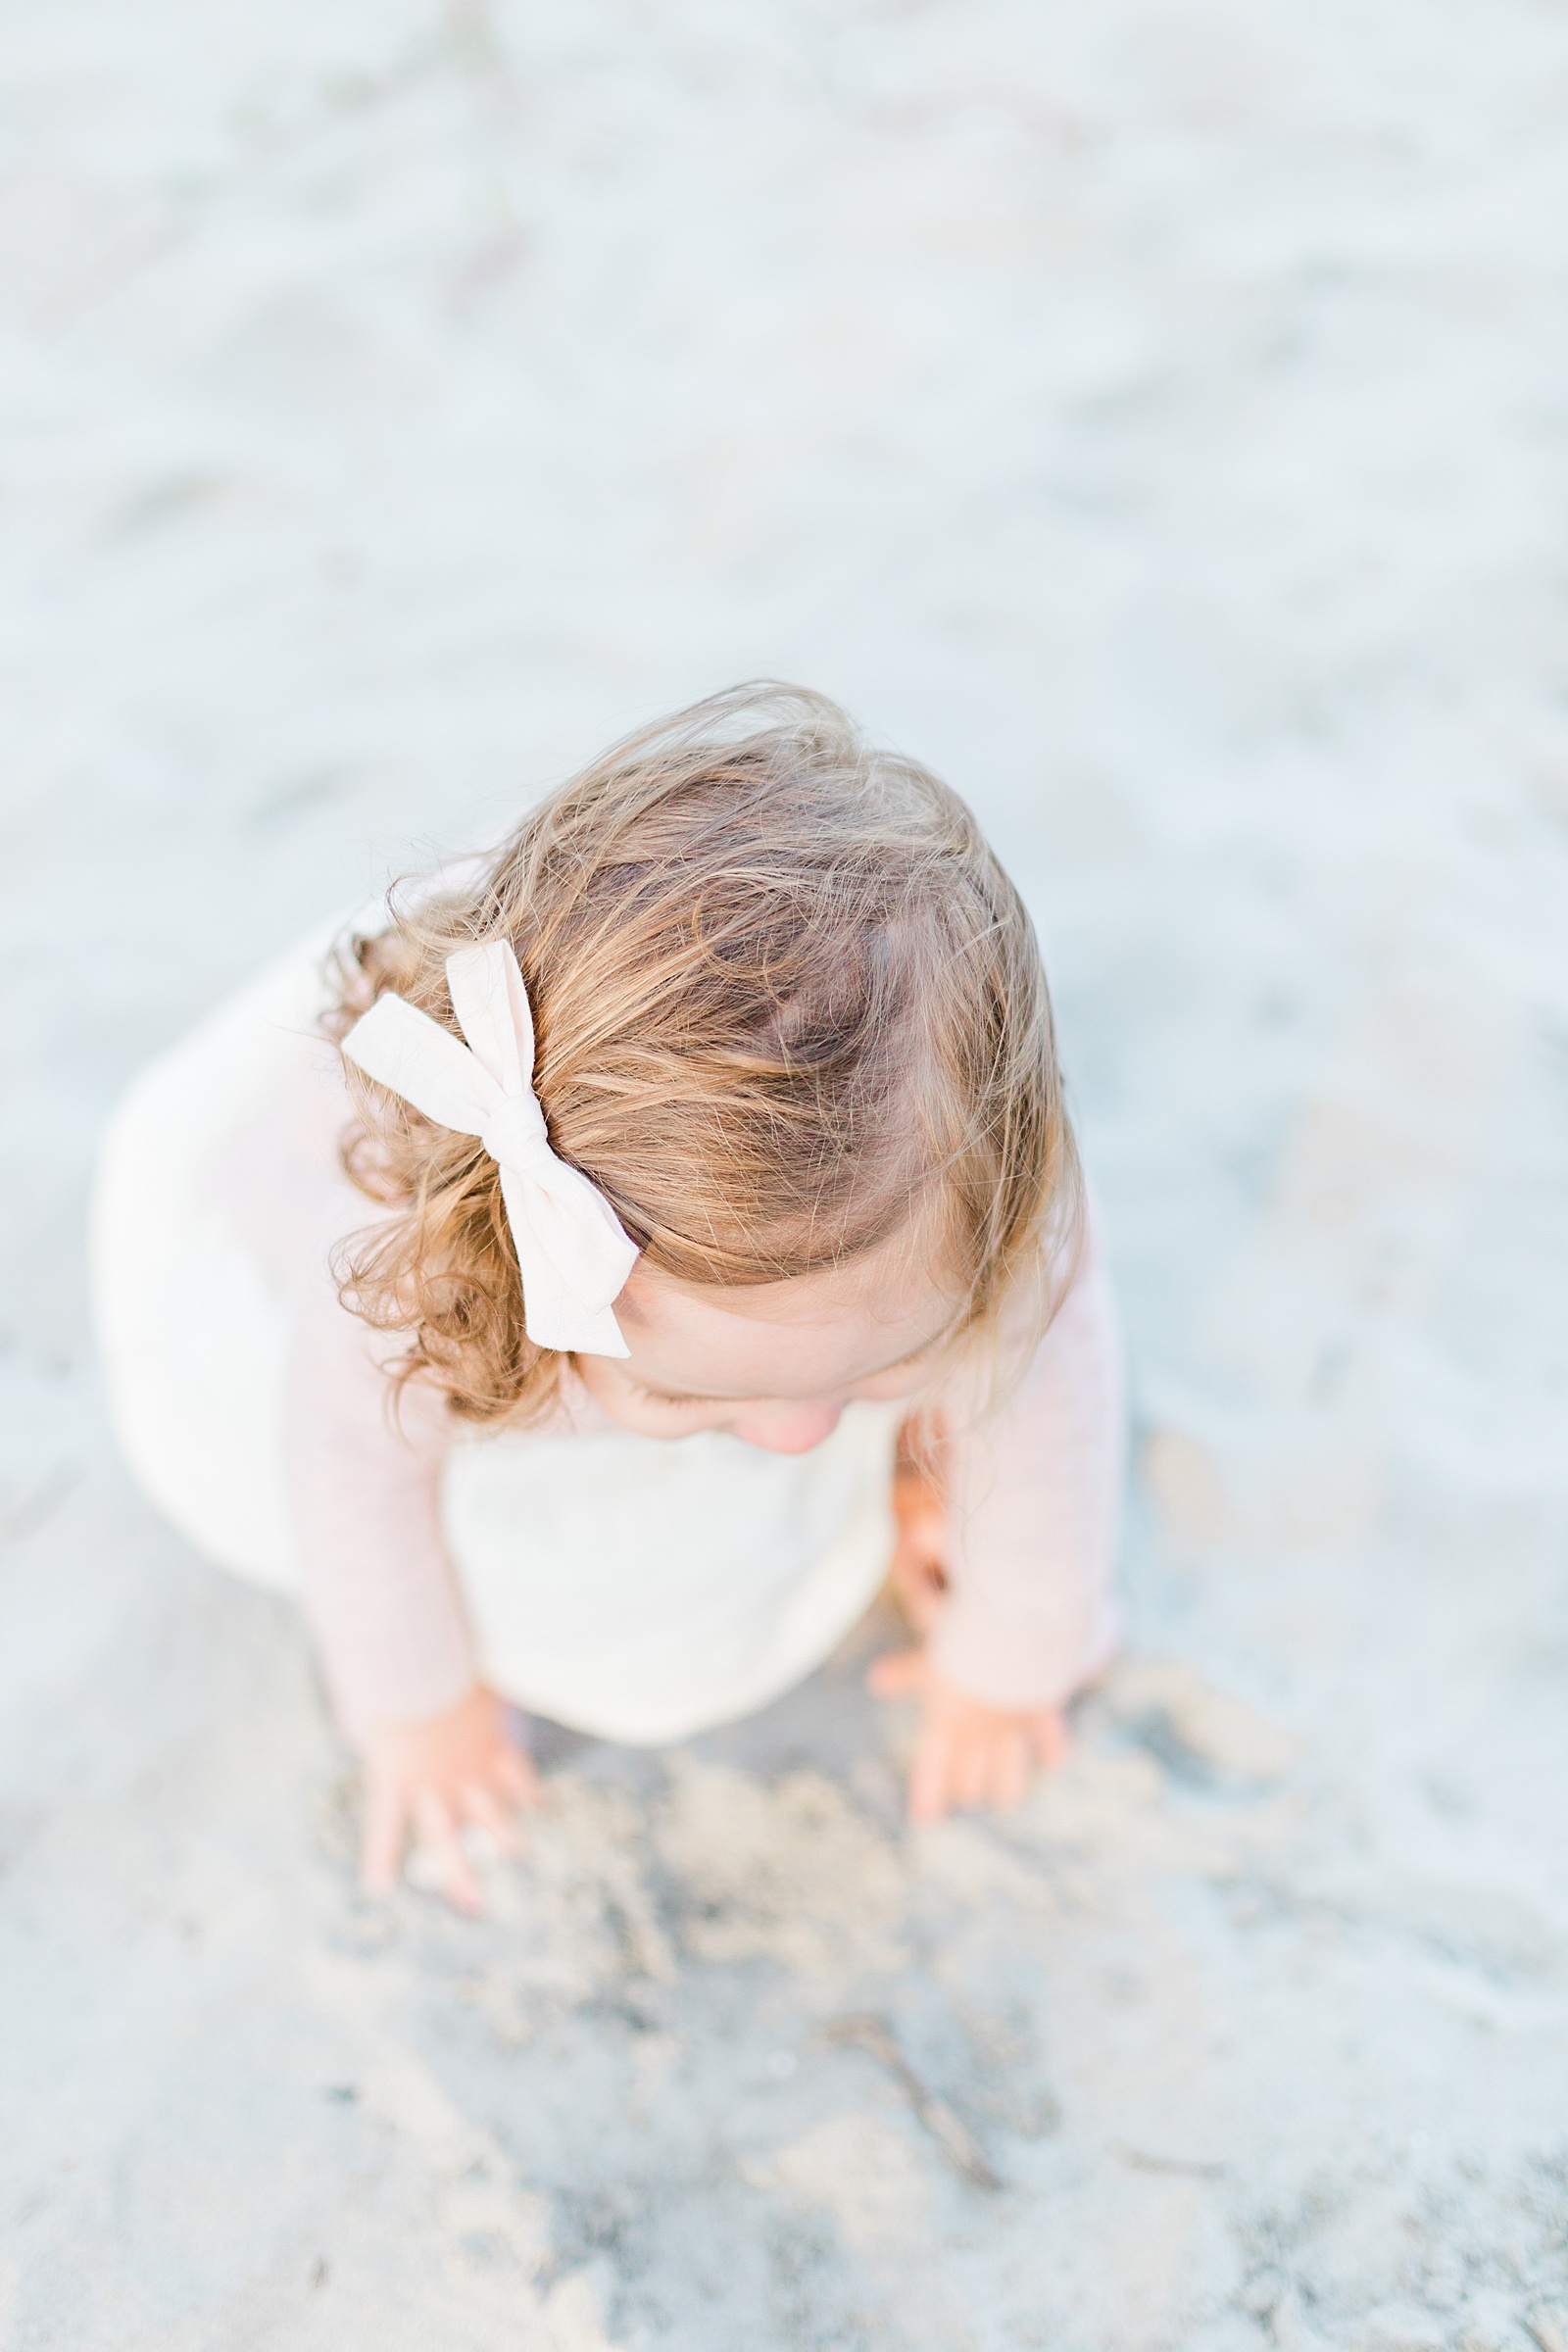 Toddler plays in sand on Folly Beach | Caitlyn Motycka Photography